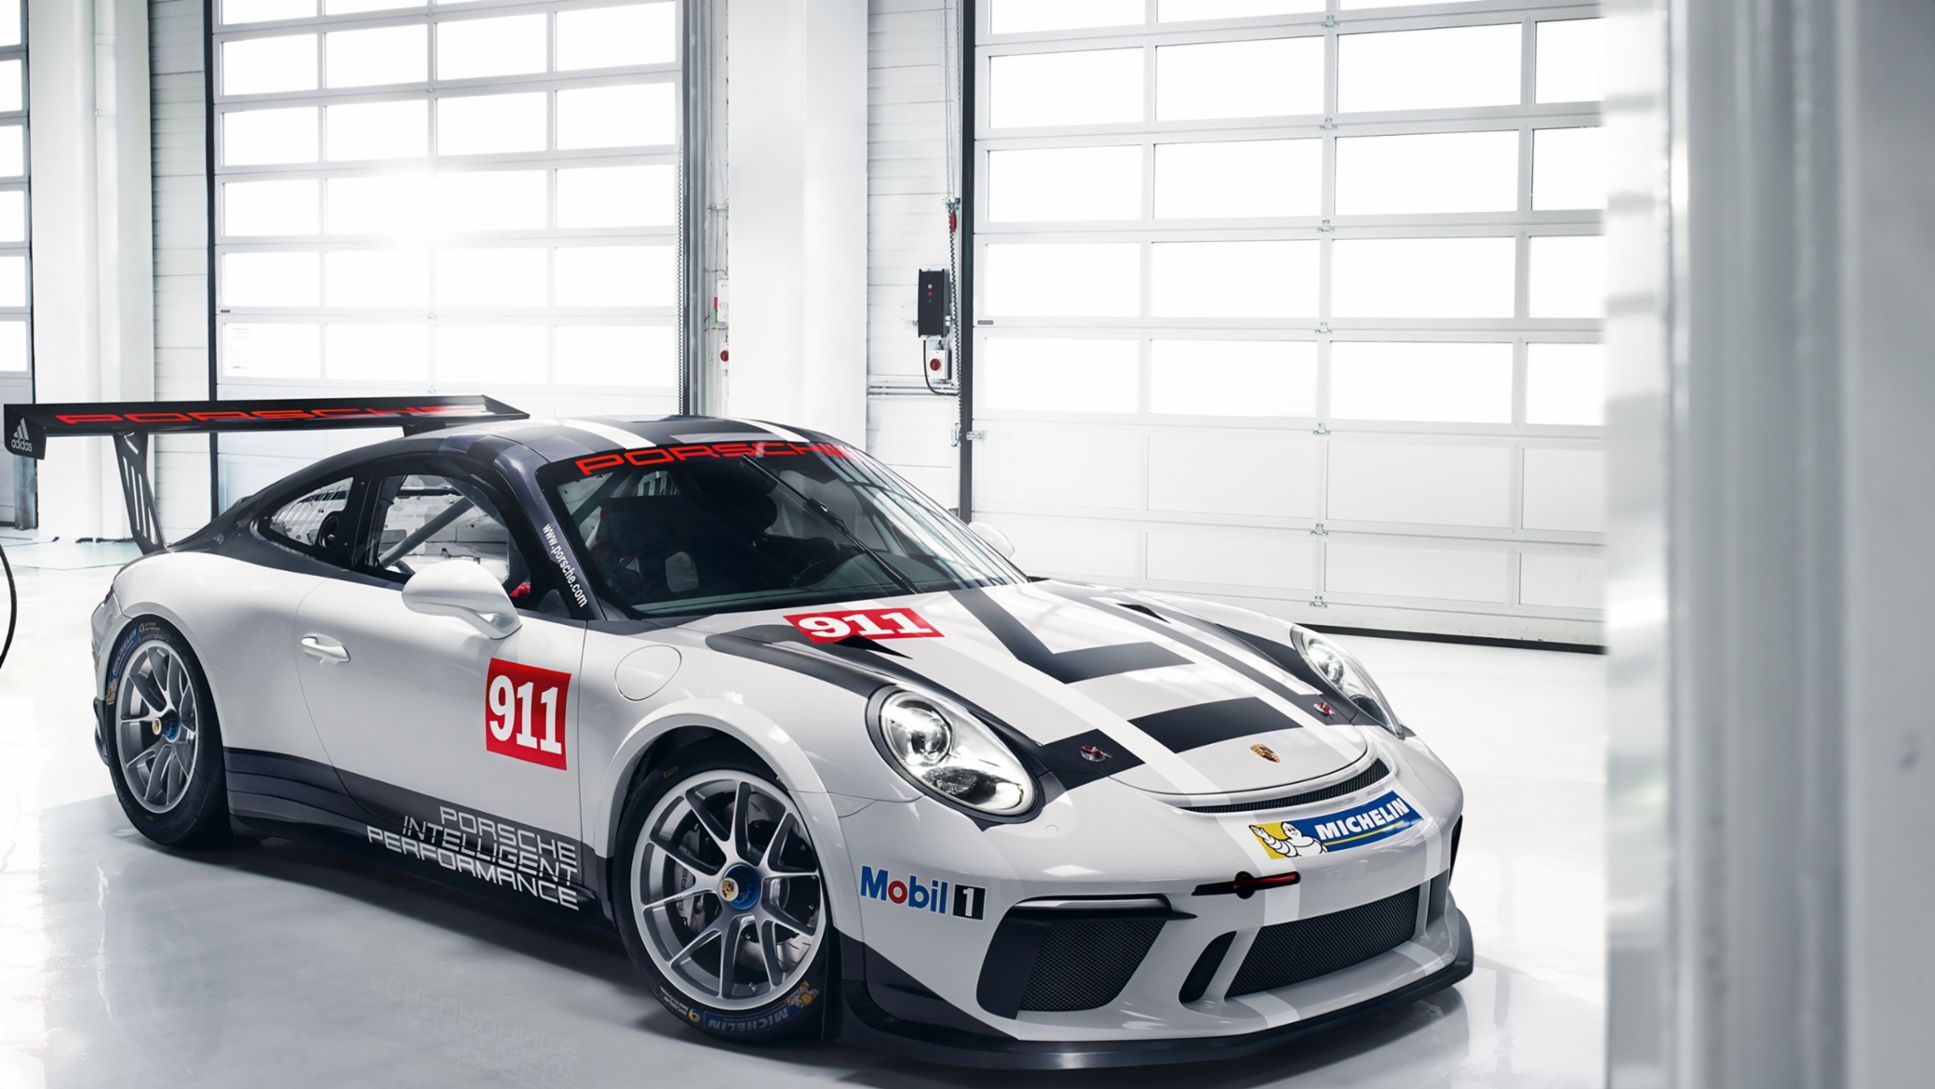 New 911 GT3 Cup with ultra-modern drive - Porsche Newsroom